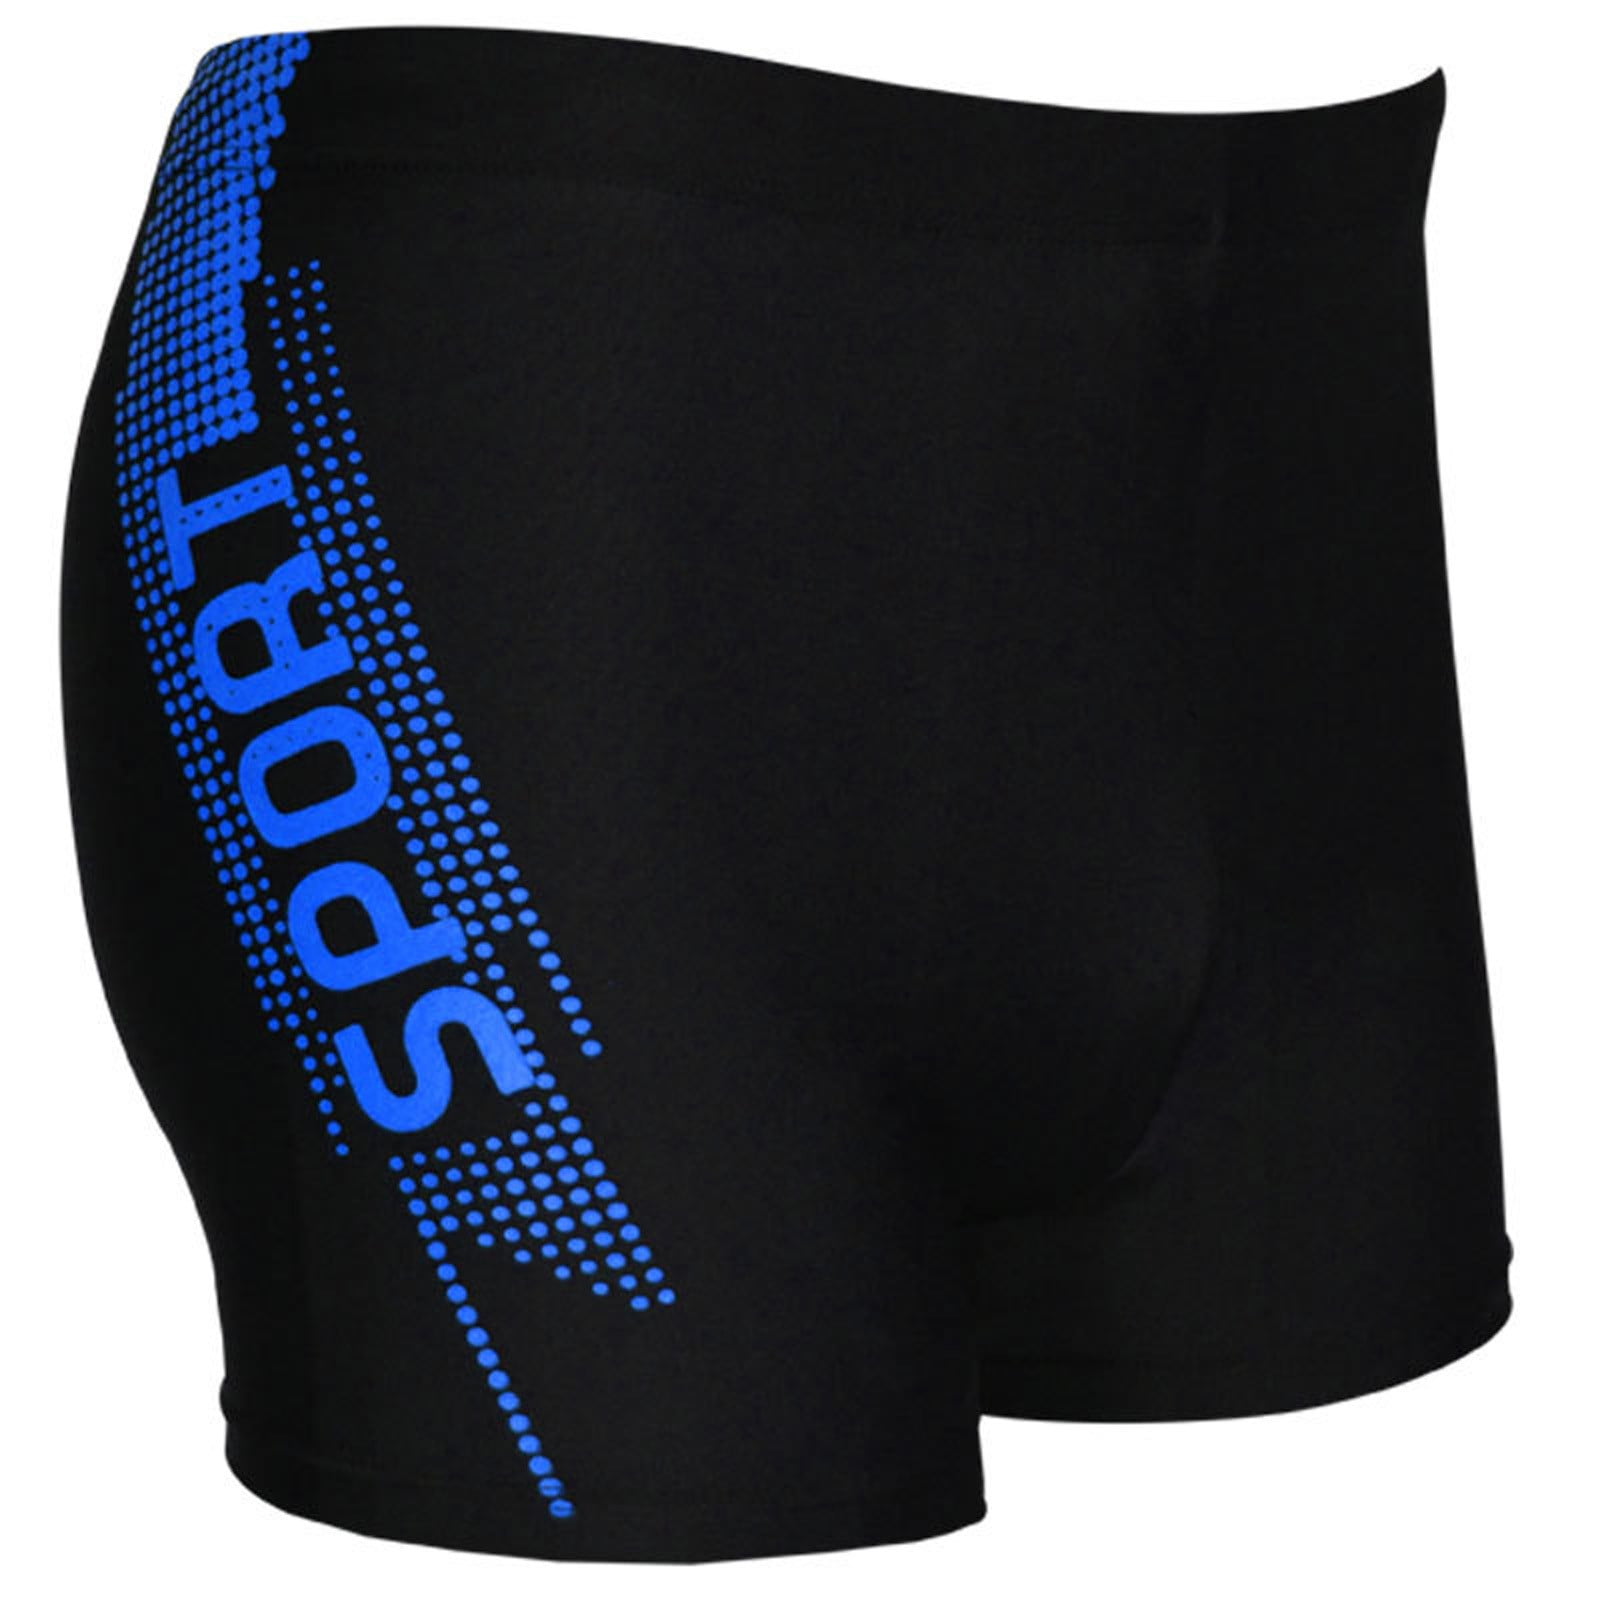 Tmoyzq Mens Square Leg Compression Swim Briefs Swimsuit Breathable Stretch Quick Dry Swimming 